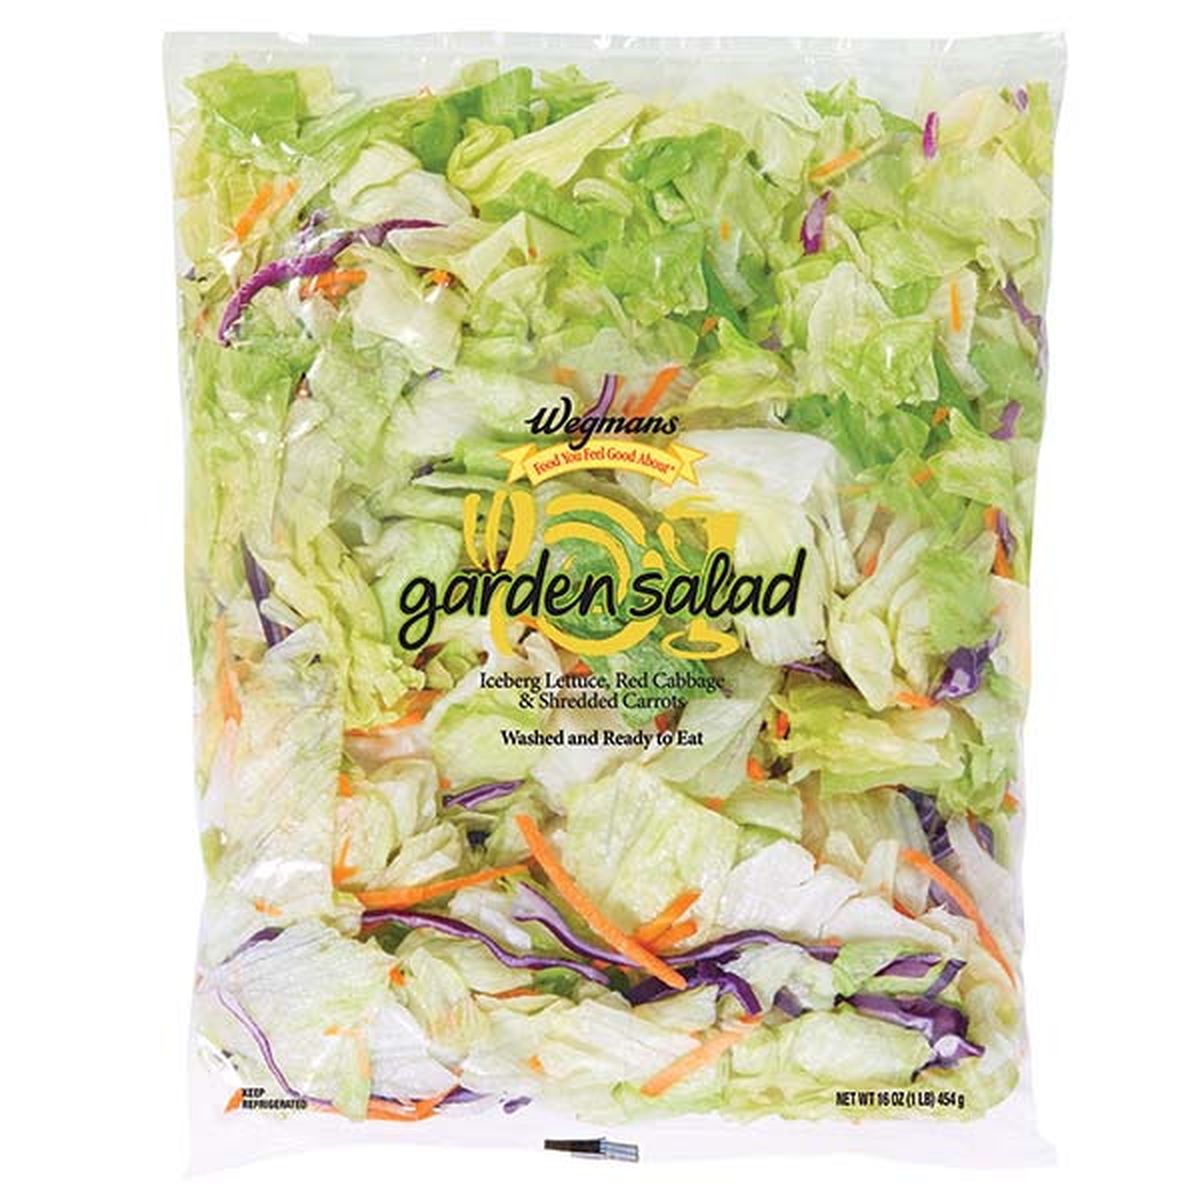 Calories in Wegmans Fresh Garden Salad